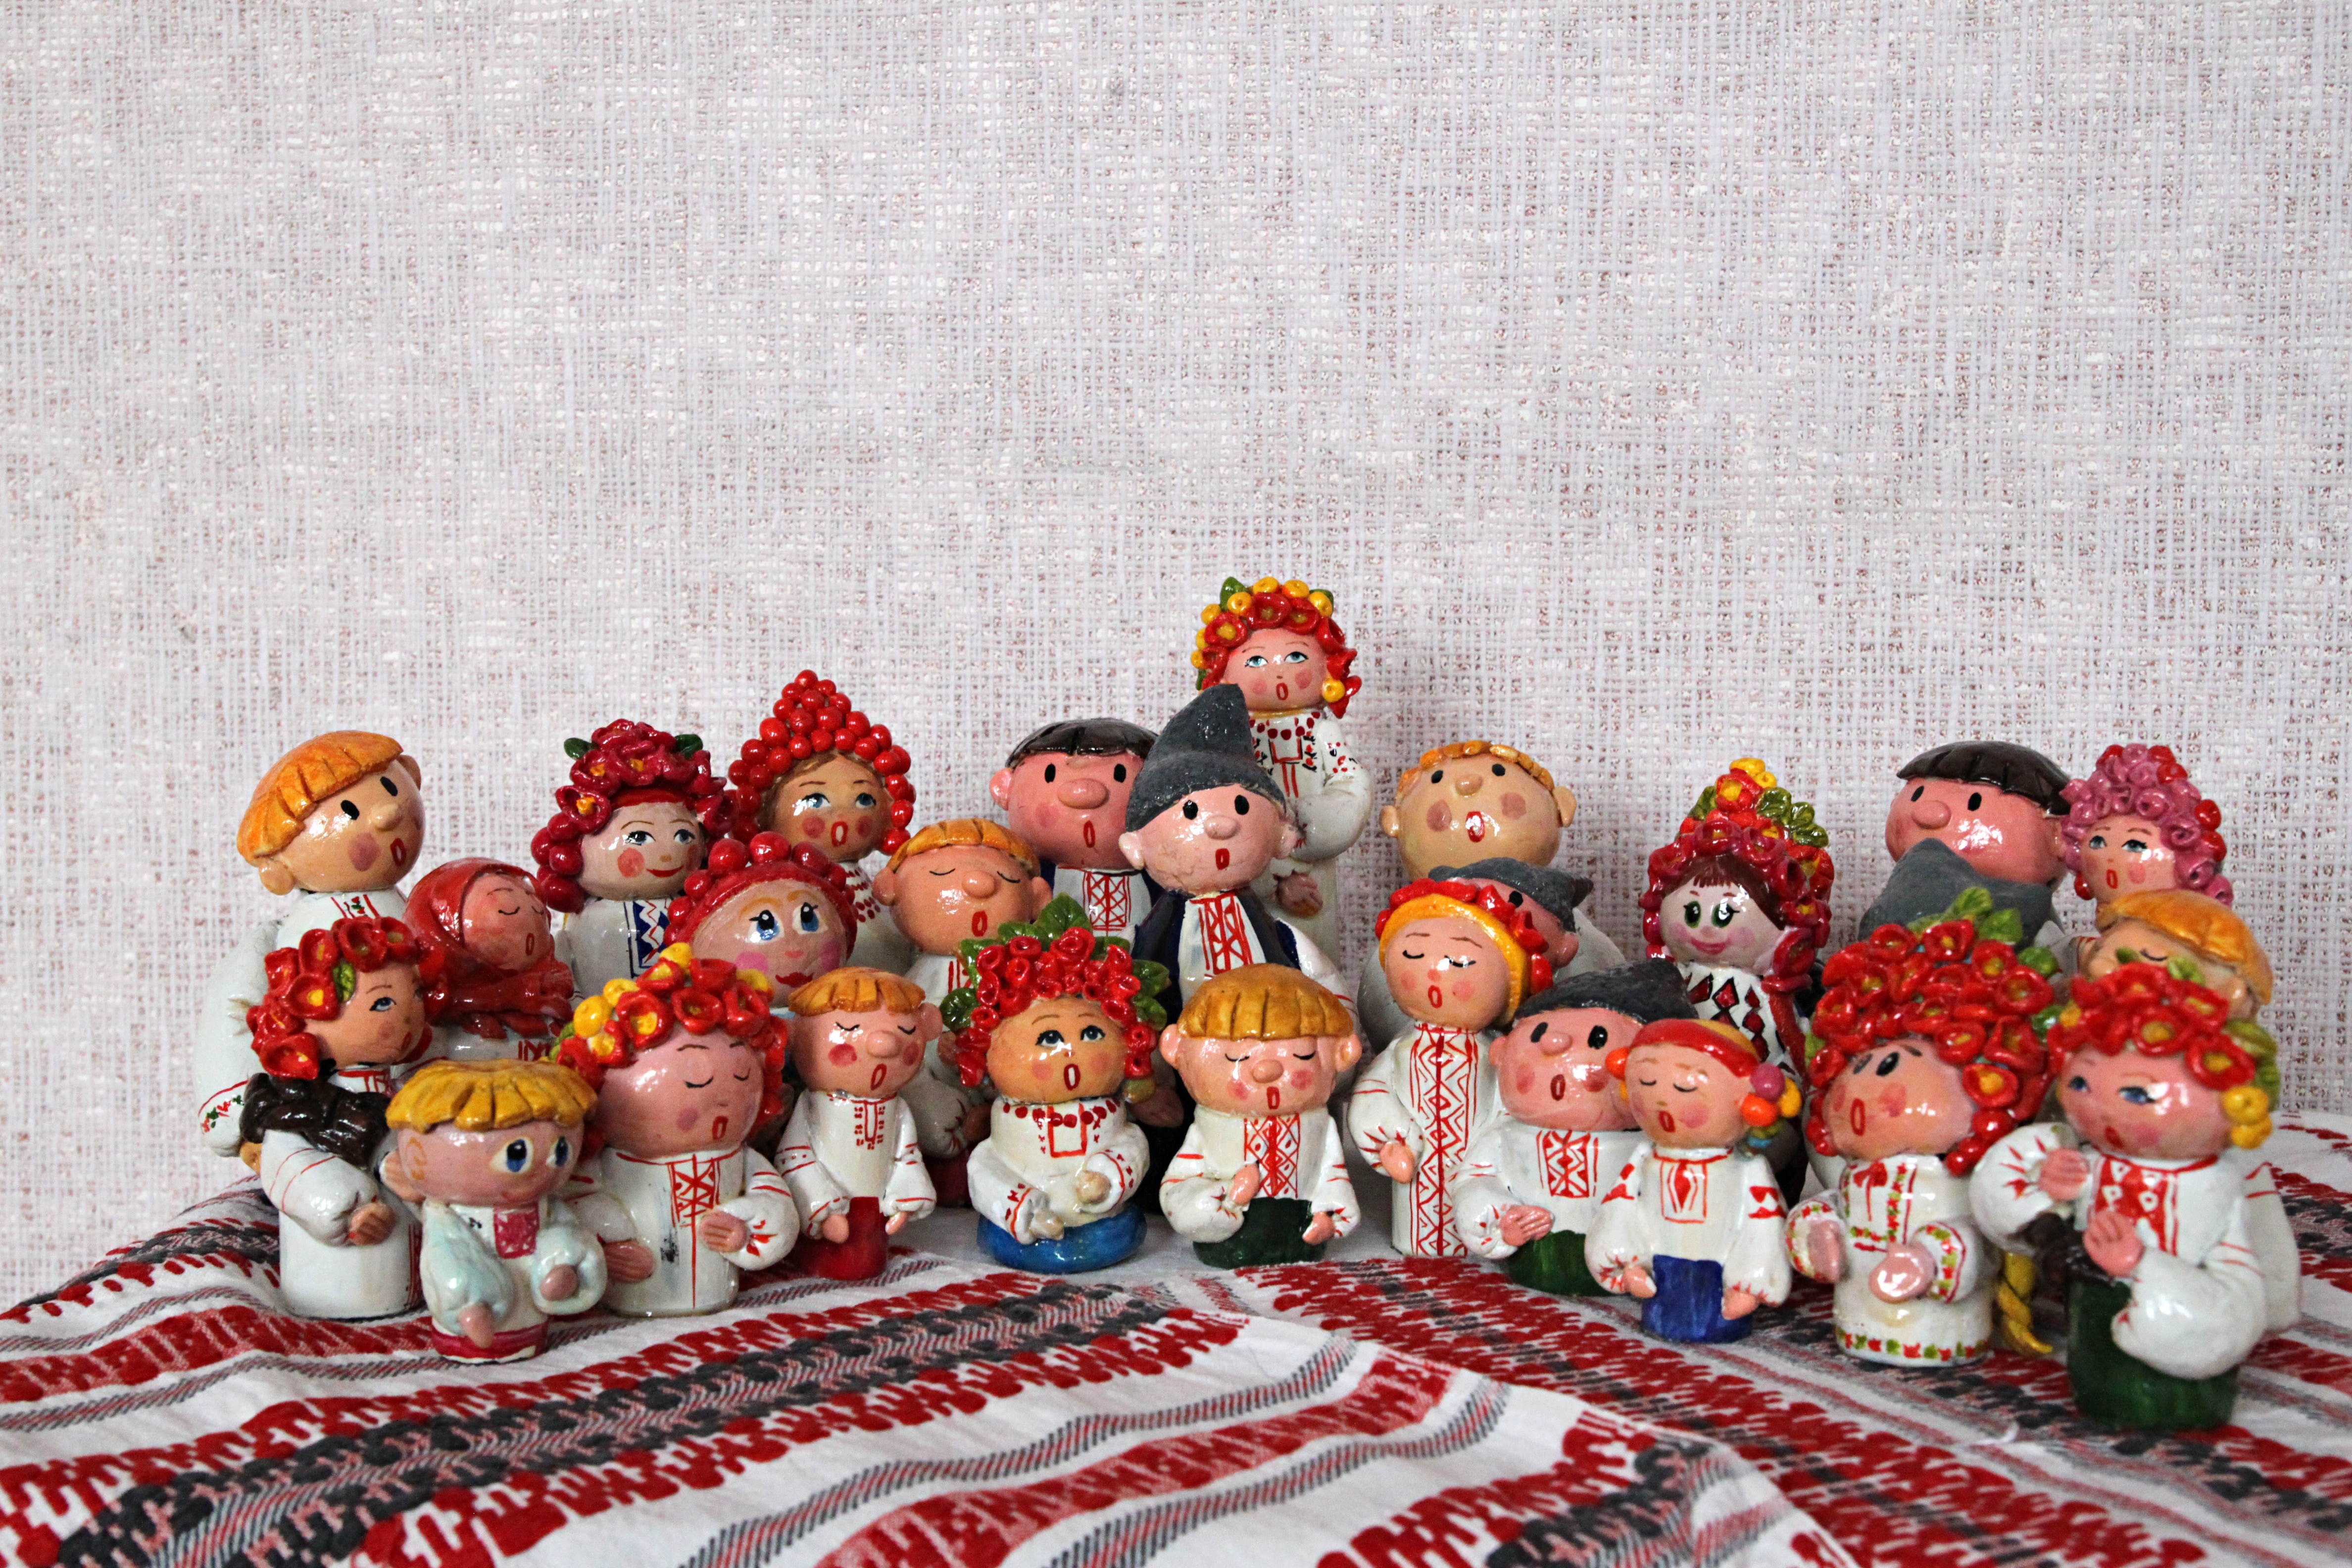 Action Figures, Ukraine, Ukrainians, figurine, large group of objects